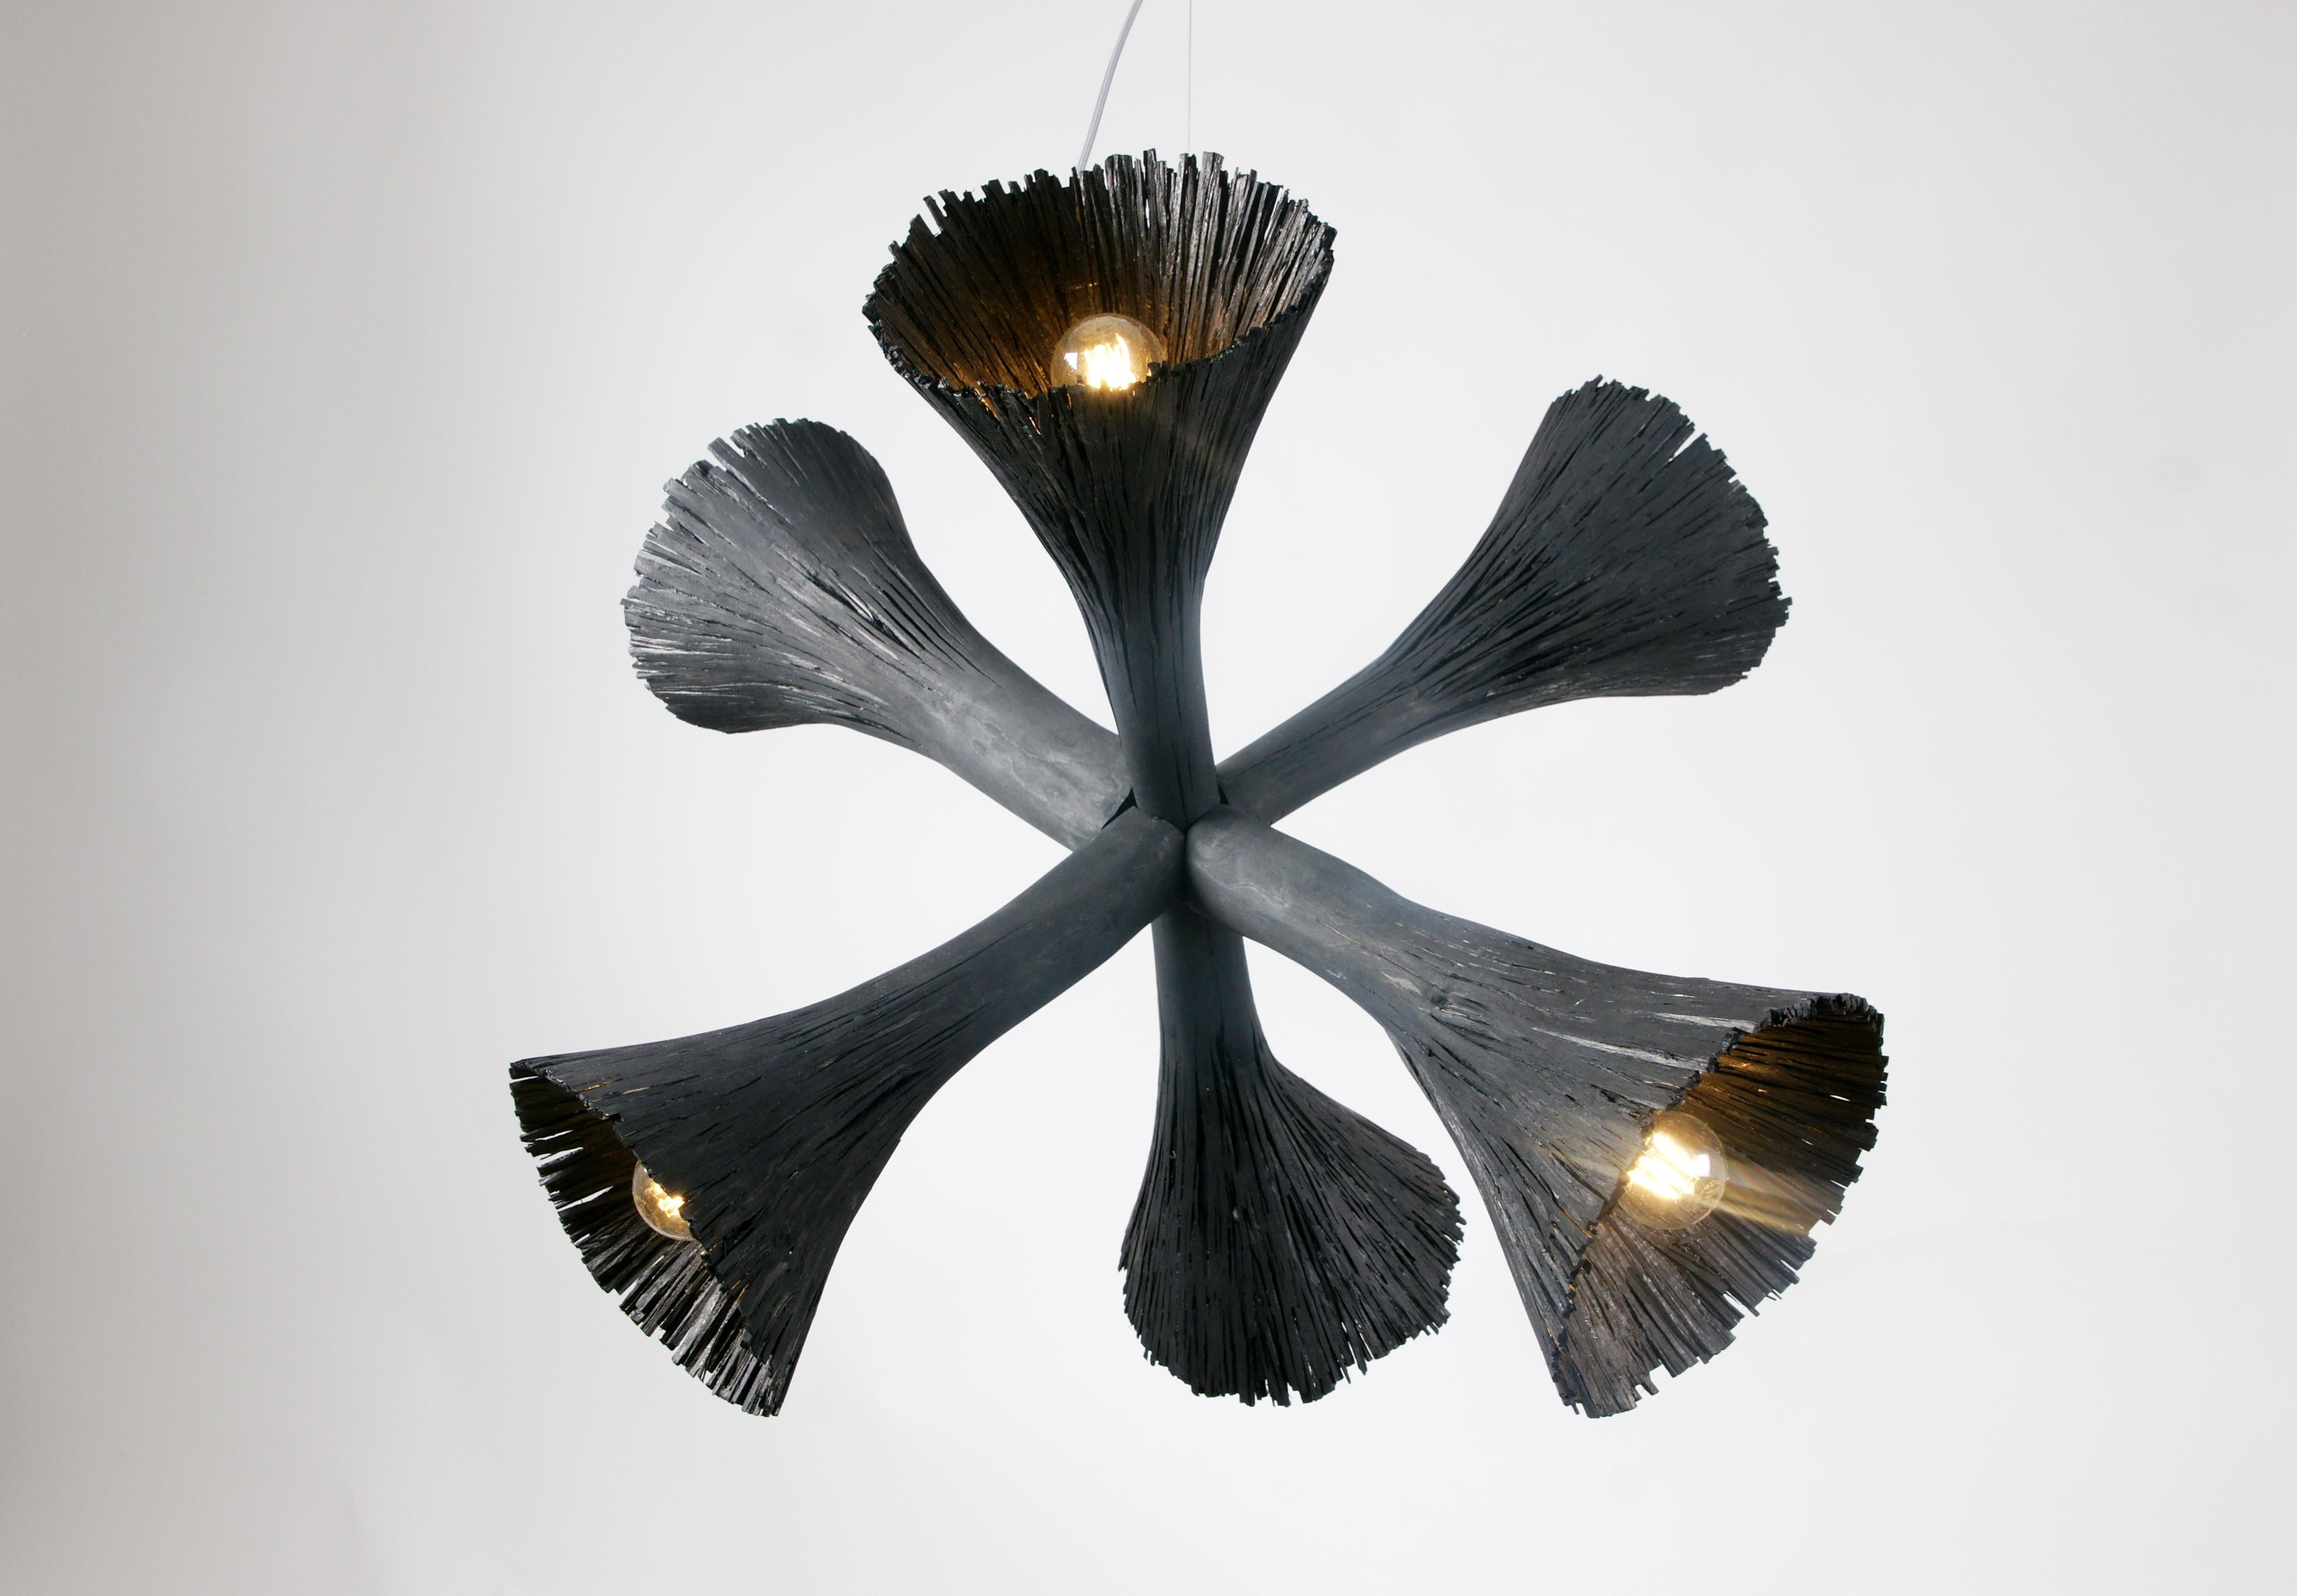 Pressed wood chandelier by Johannes Hemann
Materials: Wood 
Dimensions: Ø 80cm

The series 